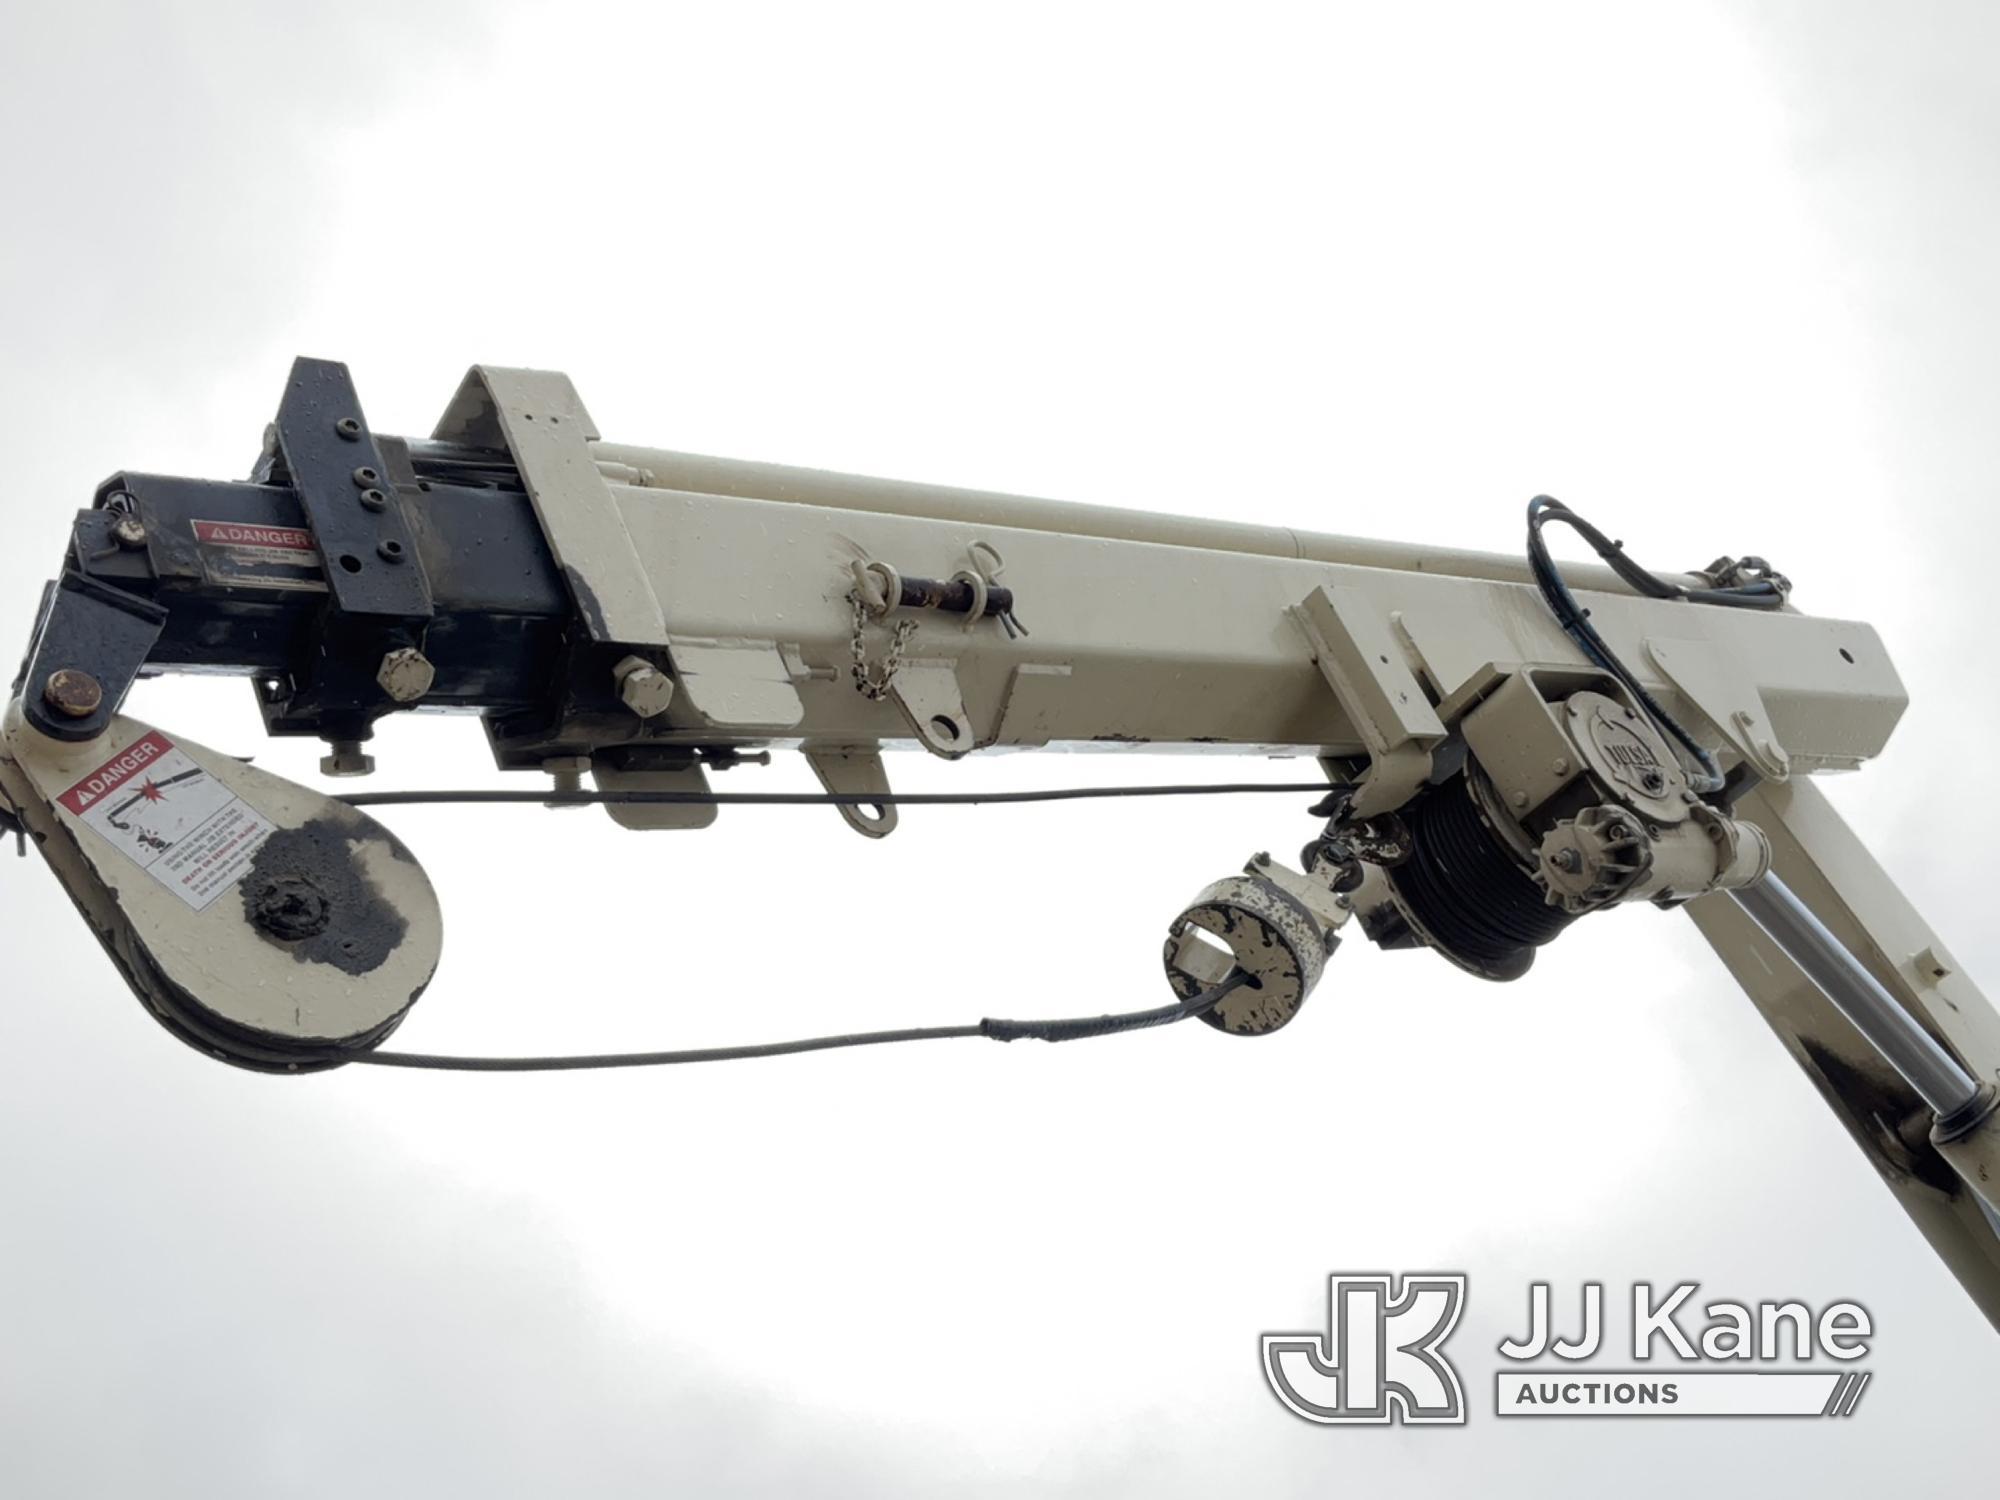 (Des Moines, IA) National N-50, Knuckleboom Crane mounted behind cab on 2004 International 4200 Stak